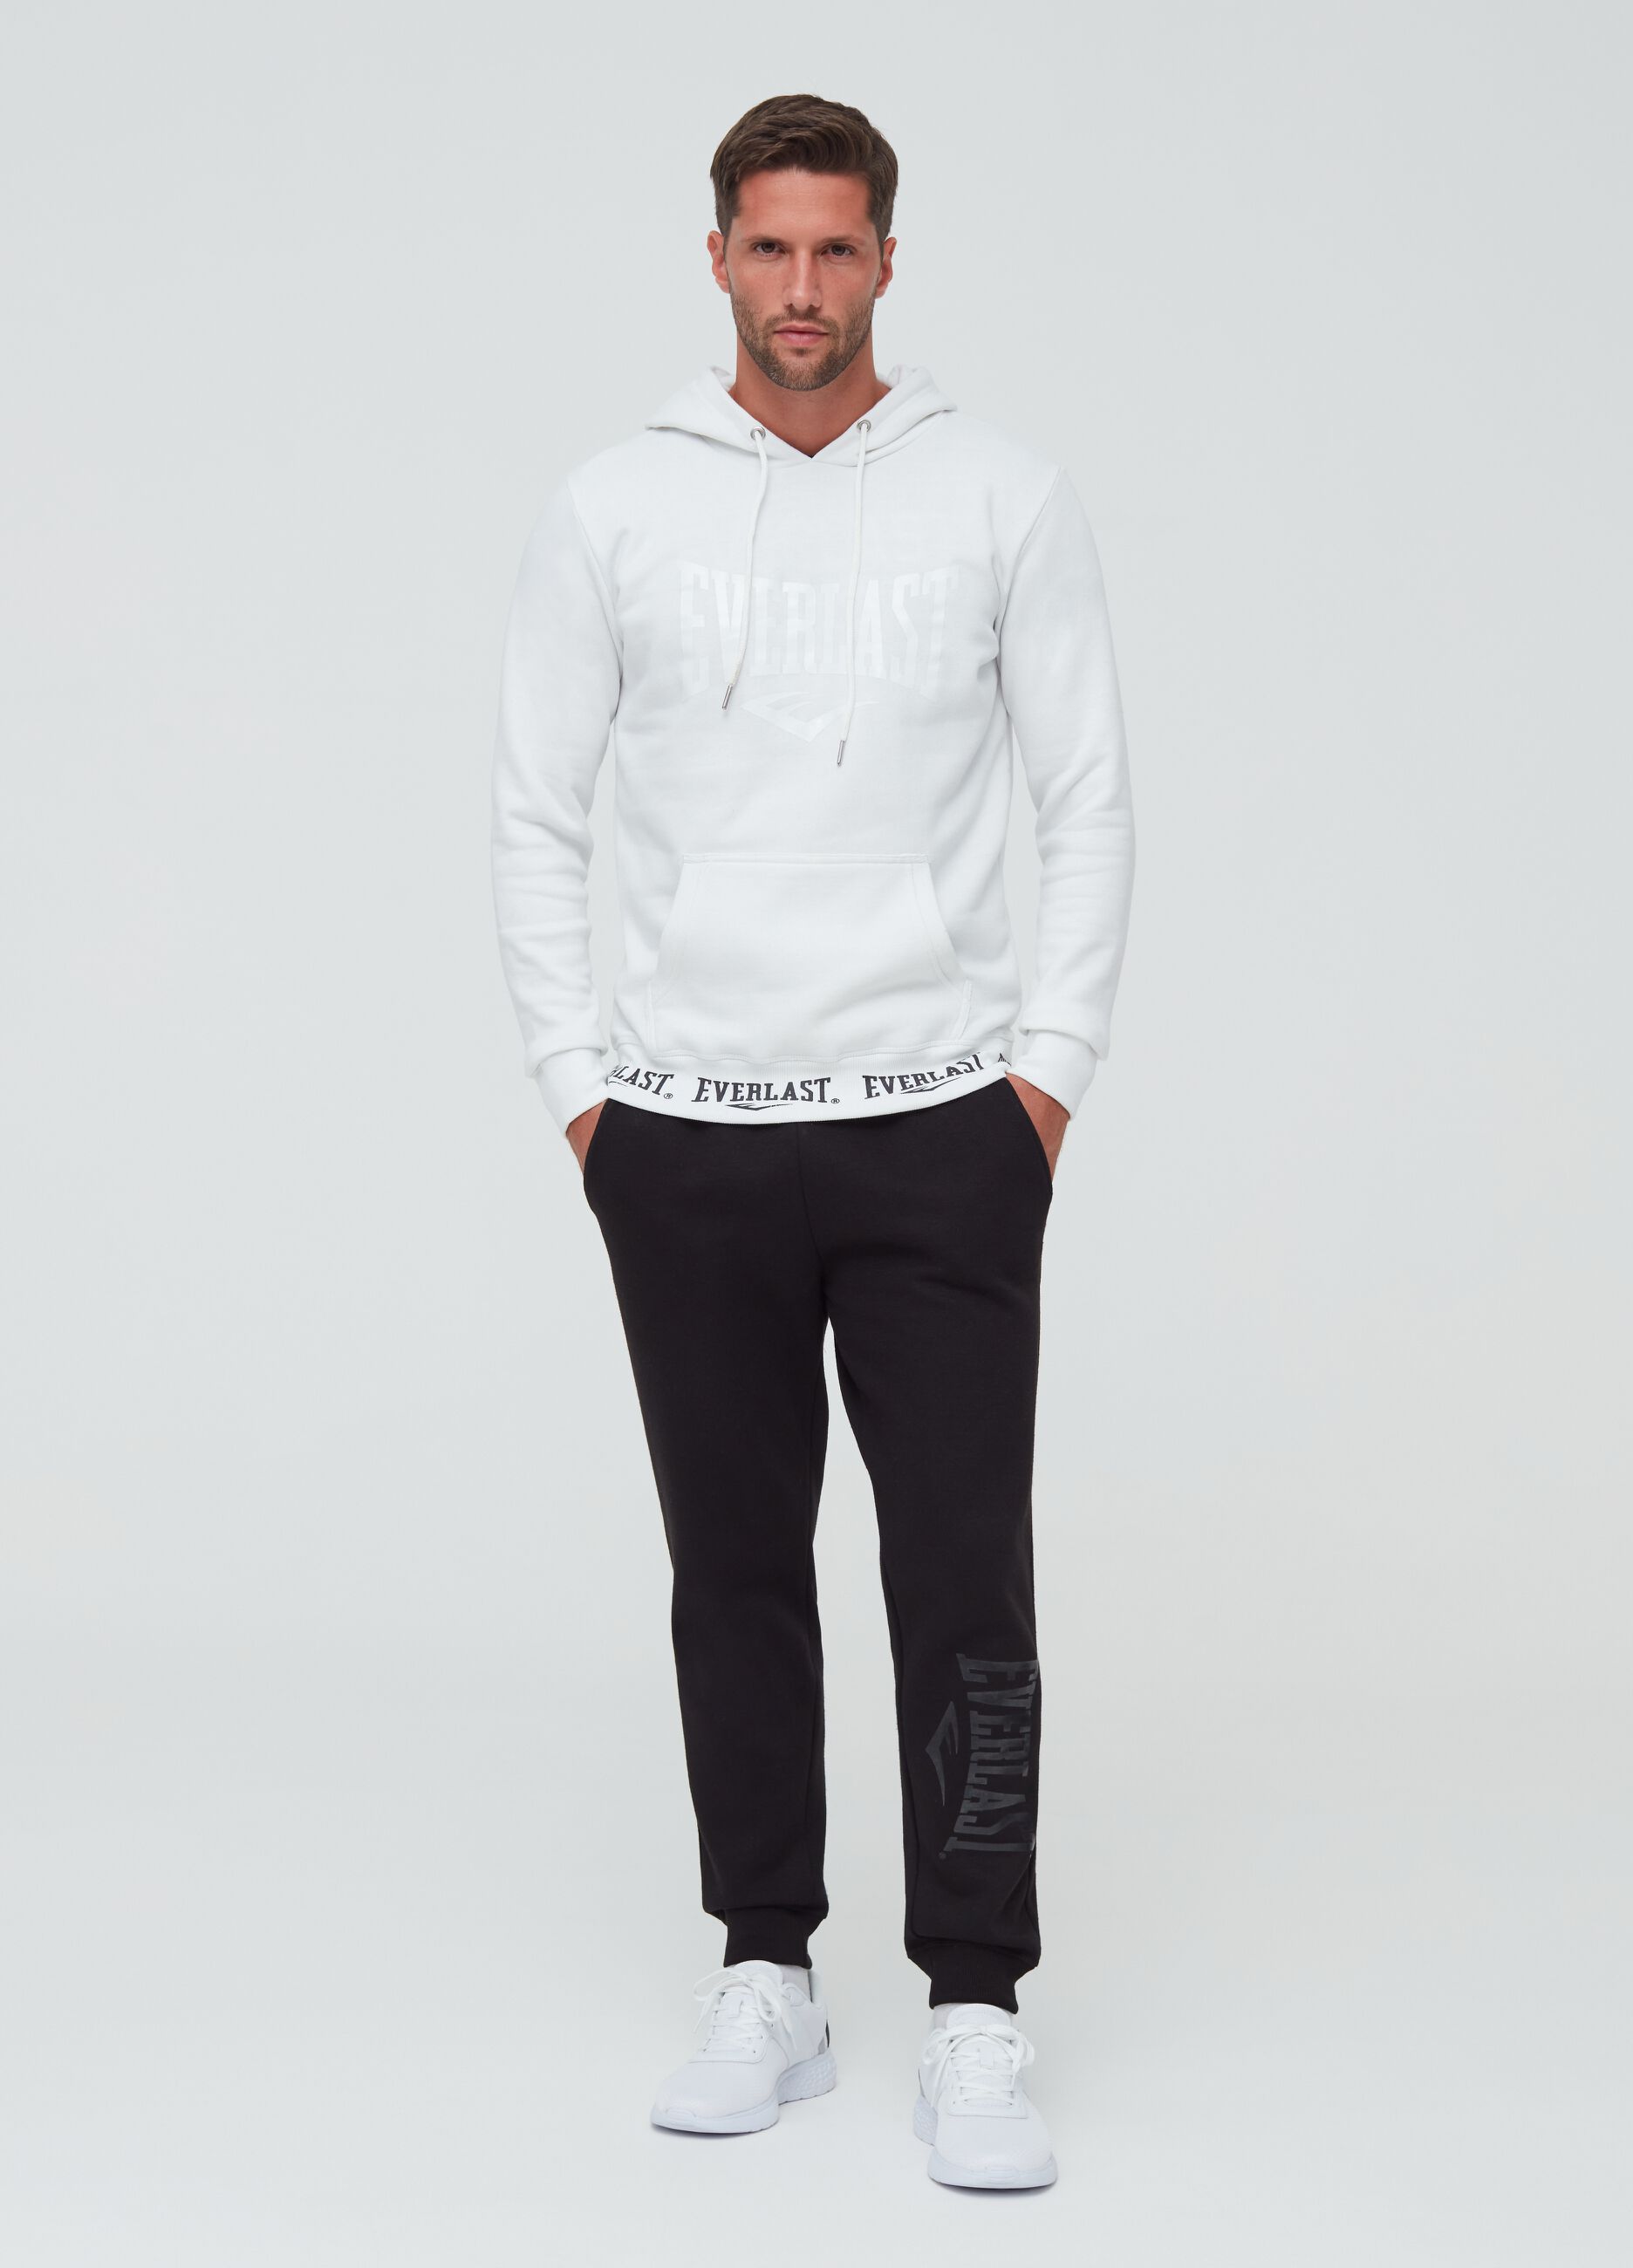 Sweatshirt with hood and Everlast print